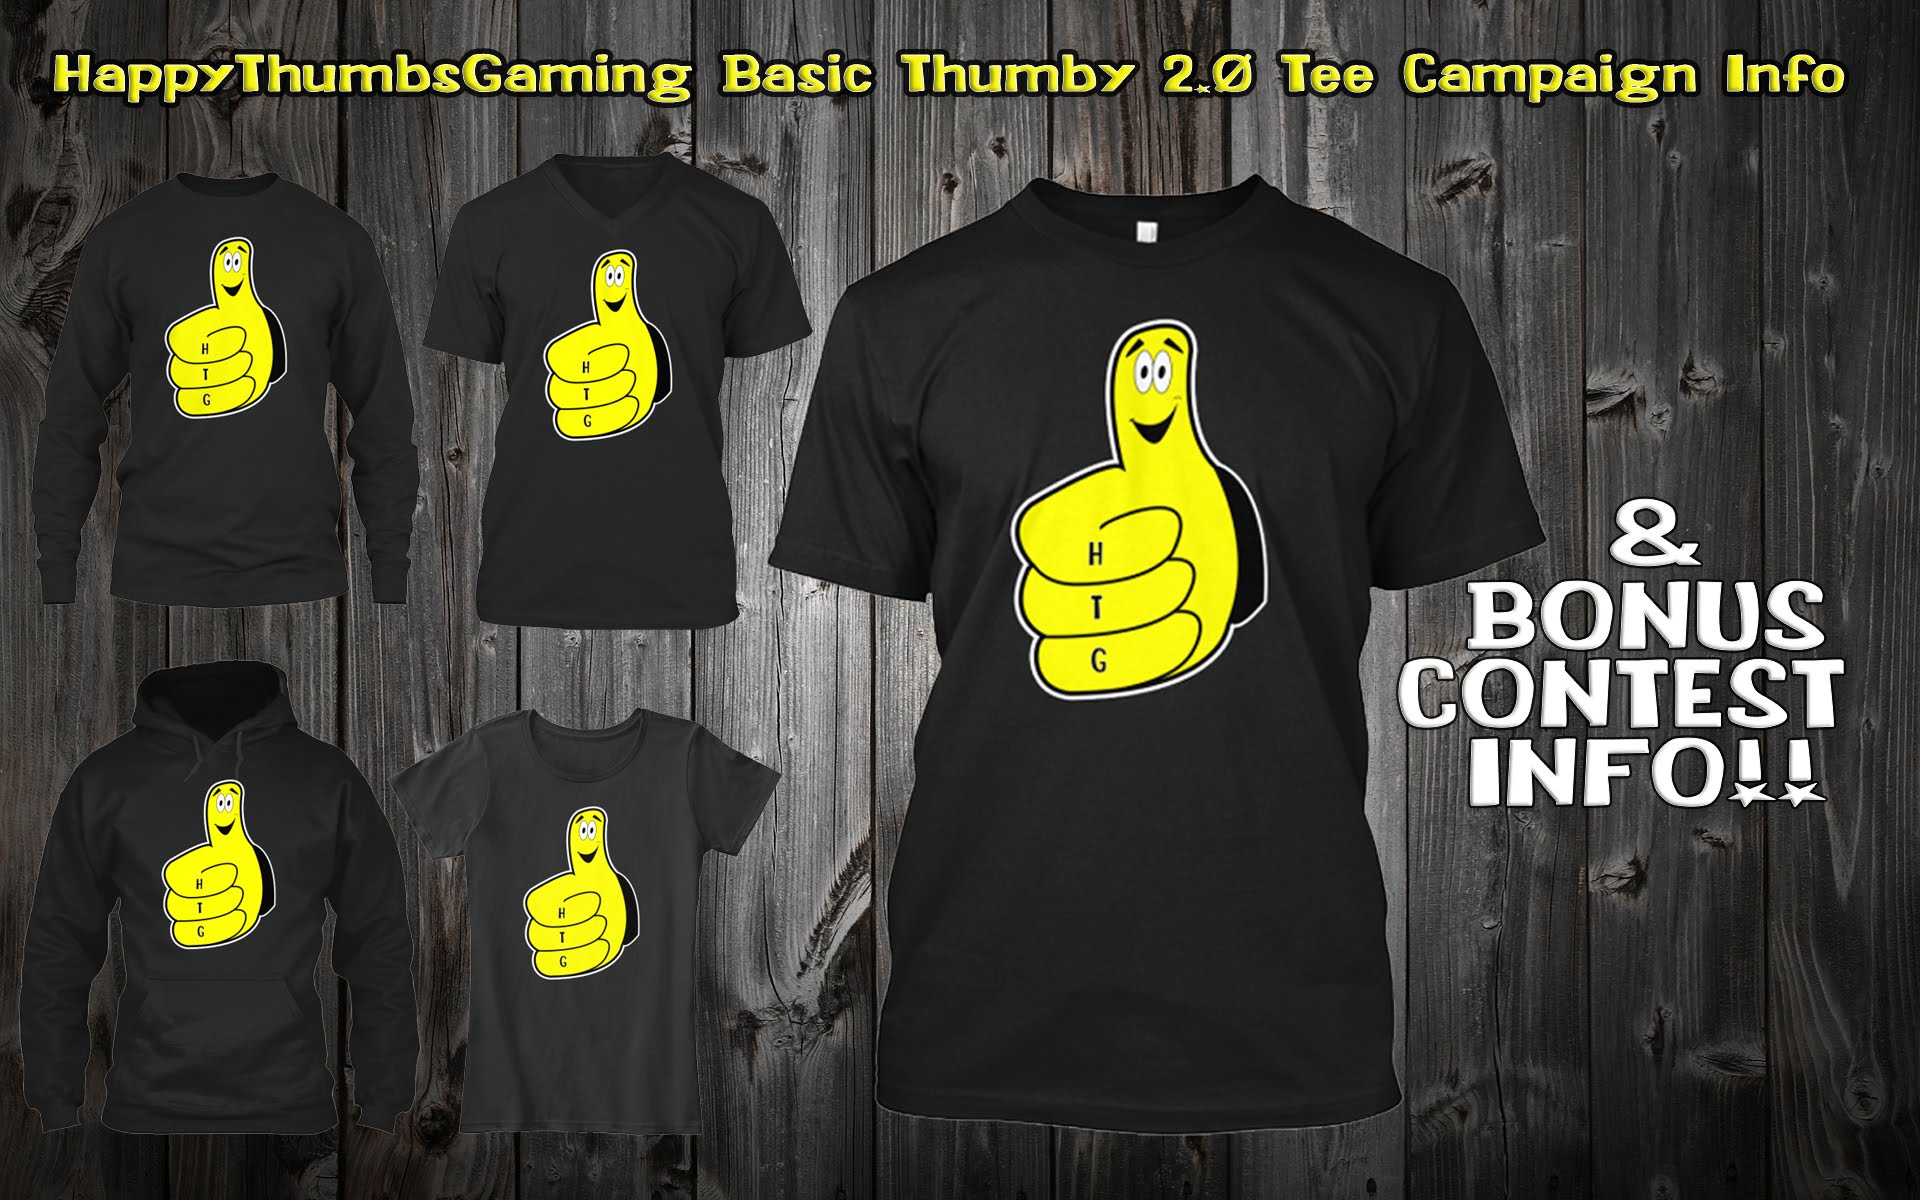 Gamebreak: HappyThumbsGaming Basic Thumby 2.0 Tee and Bonus Contest Info – HTG